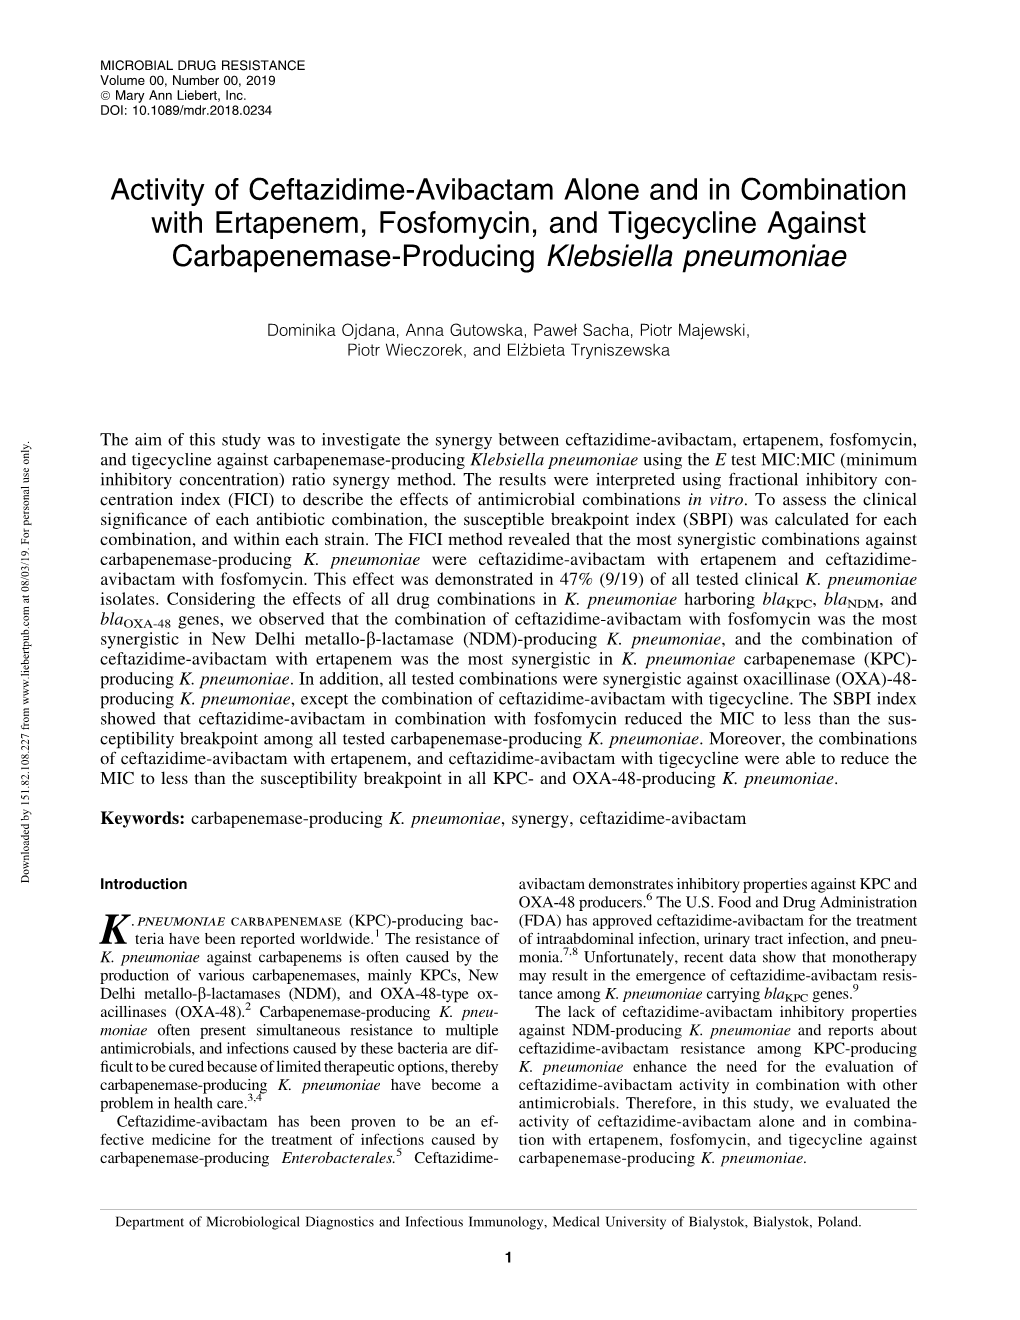 Activity of Ceftazidime-Avibactam Alone and in Combination with Ertapenem, Fosfomycin, and Tigecycline Against Carbapenemase-Producing Klebsiella Pneumoniae